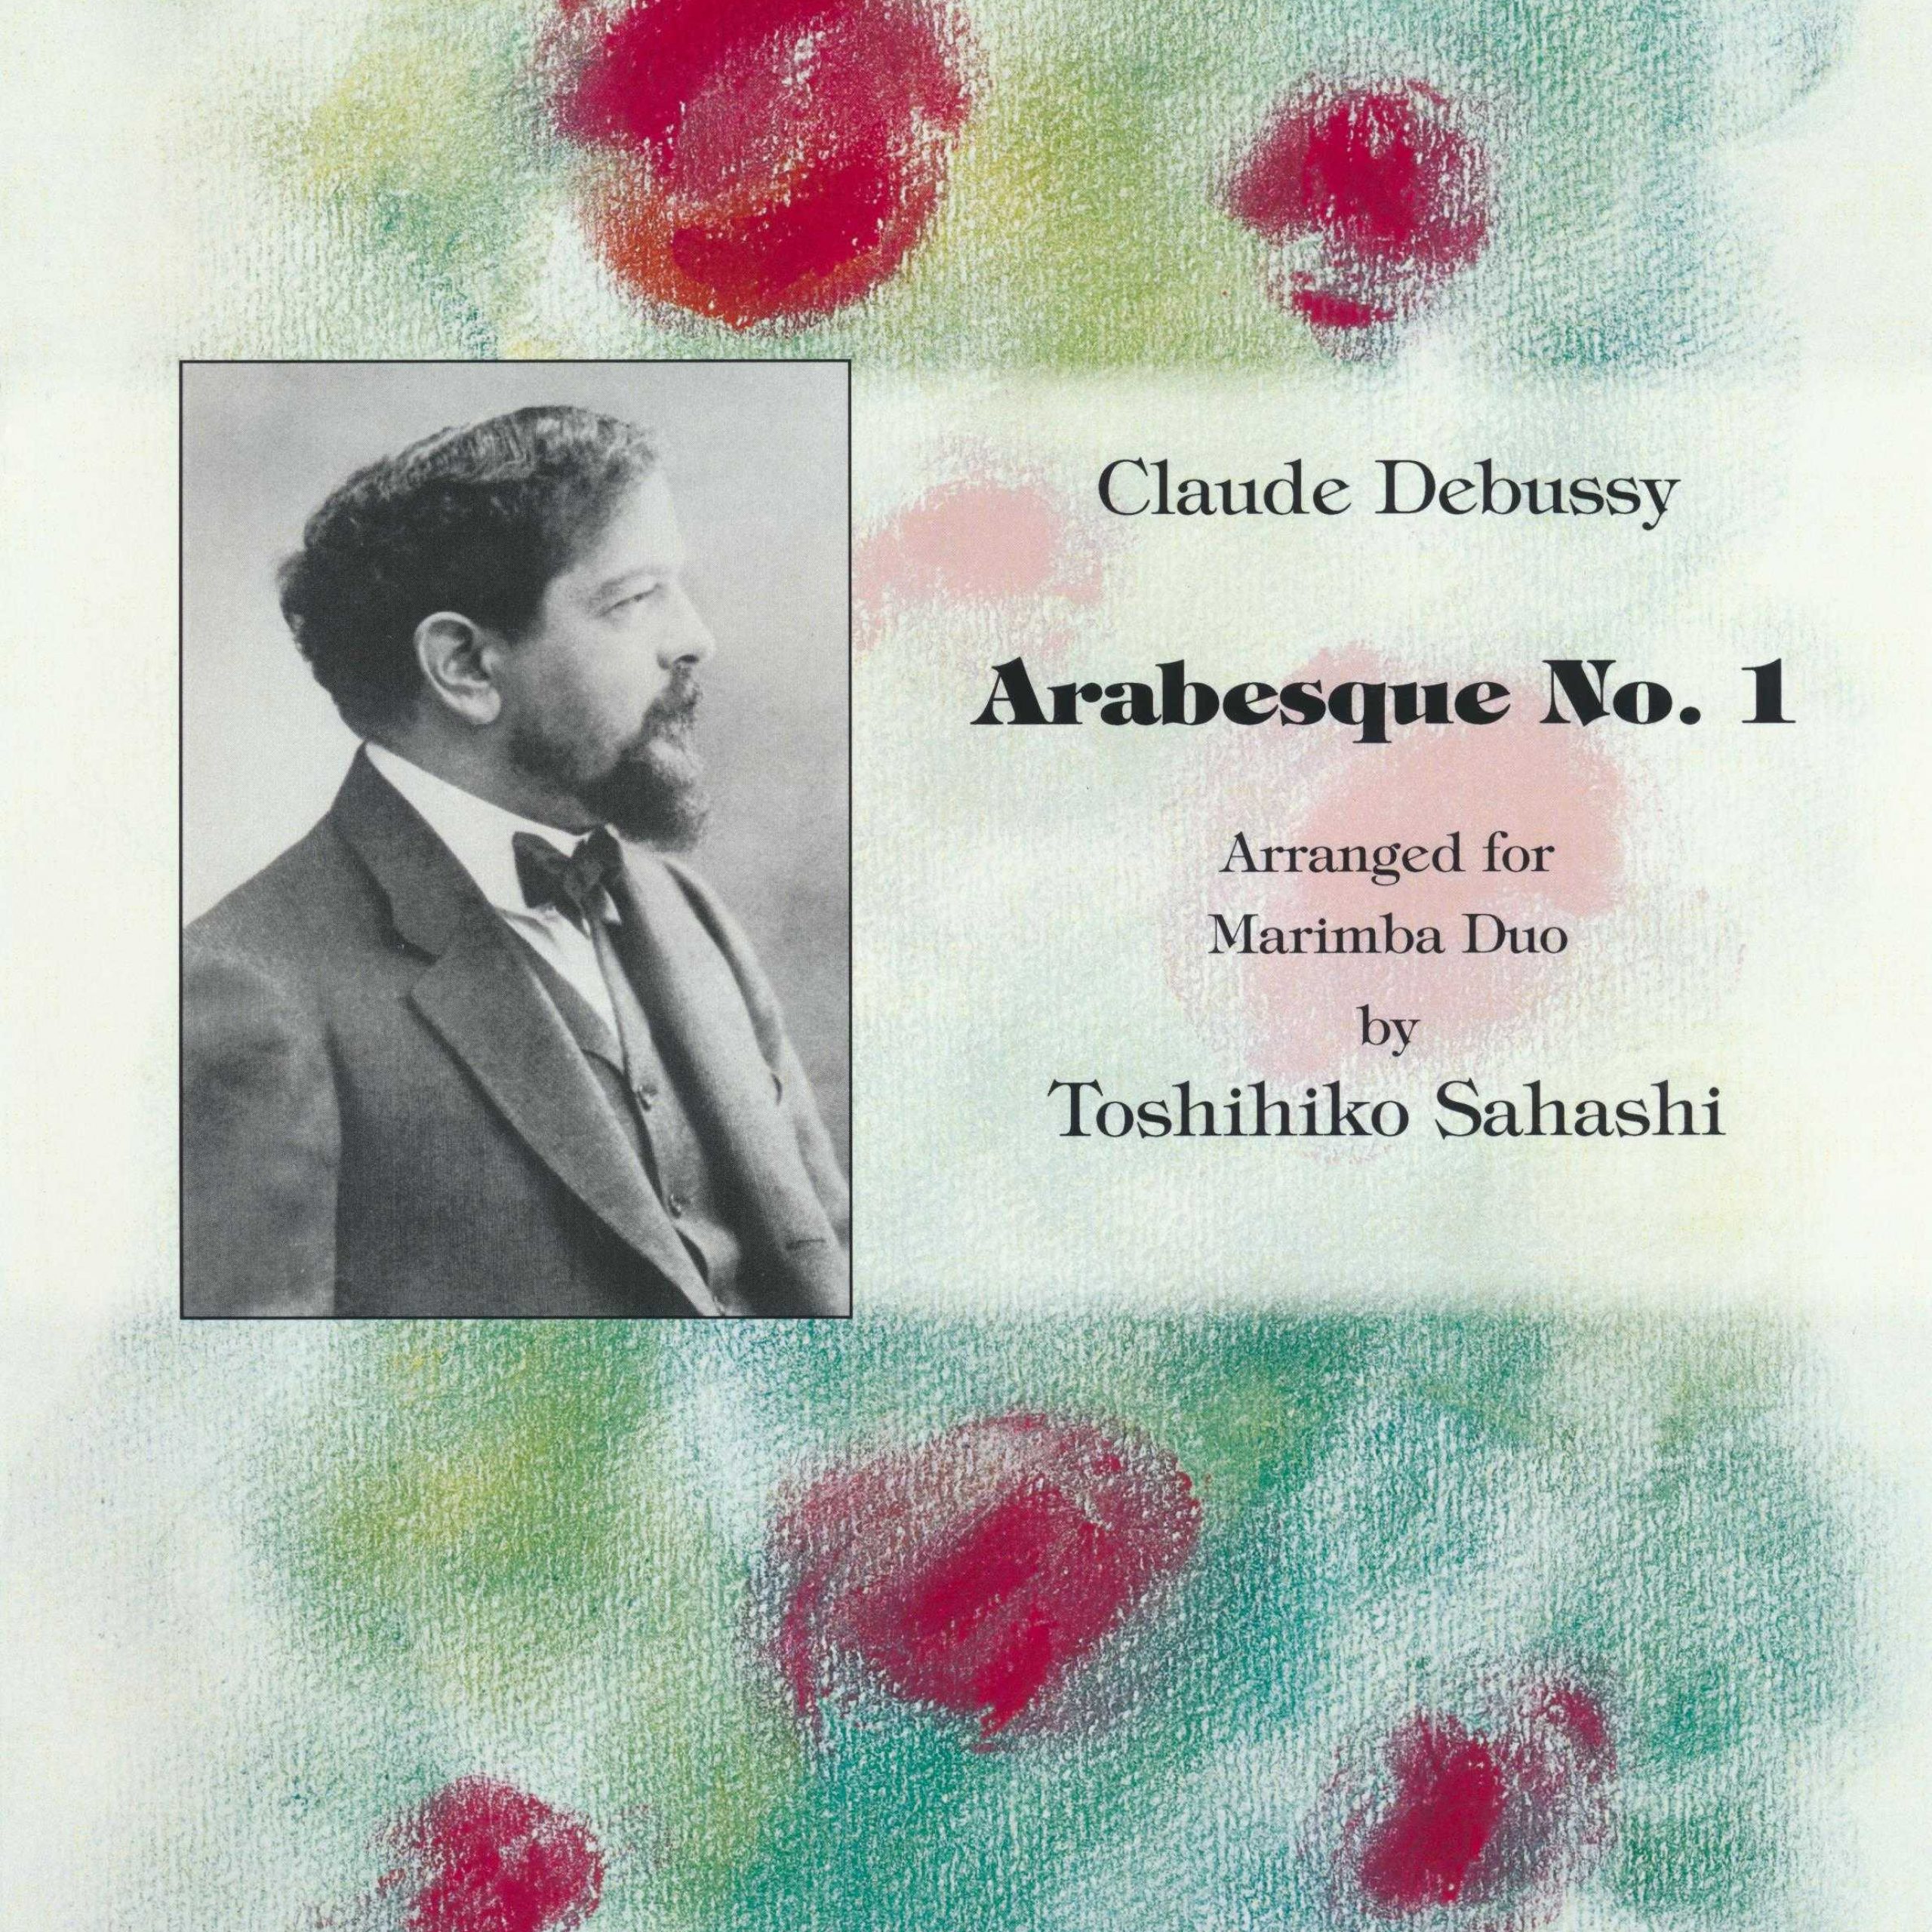 Arabesque No. 1 by Debussy arr. Toshihiko Sahashi